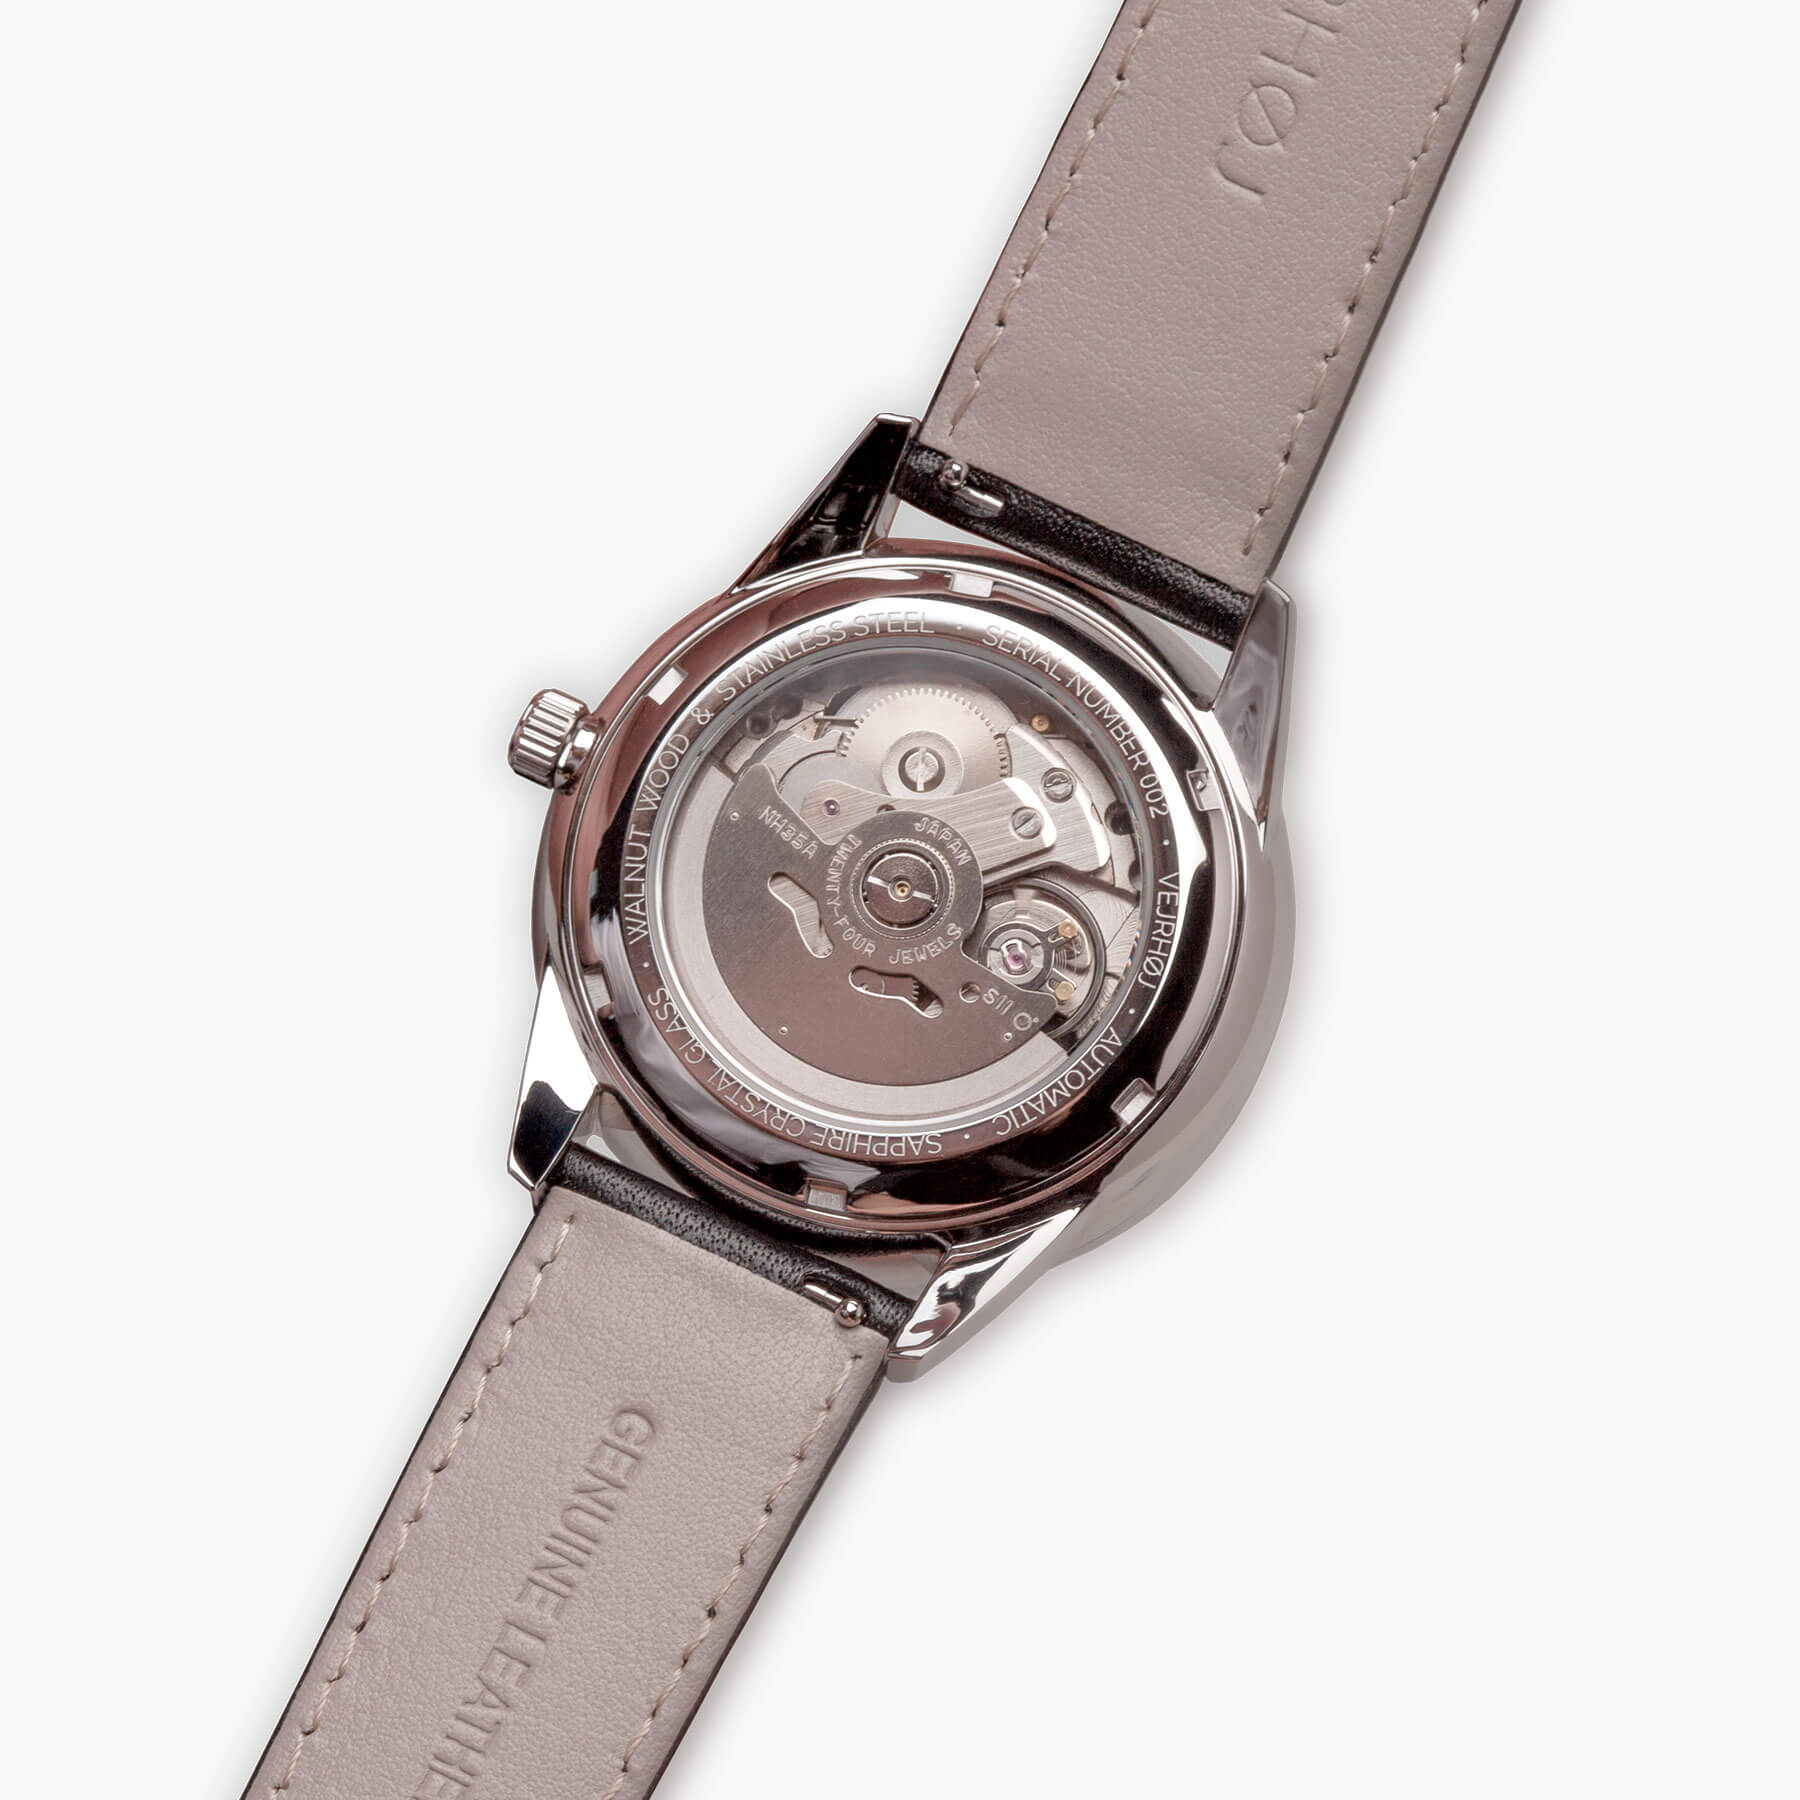 backside of black automatic wrist watch from Vejrhøj showcasing inner workings